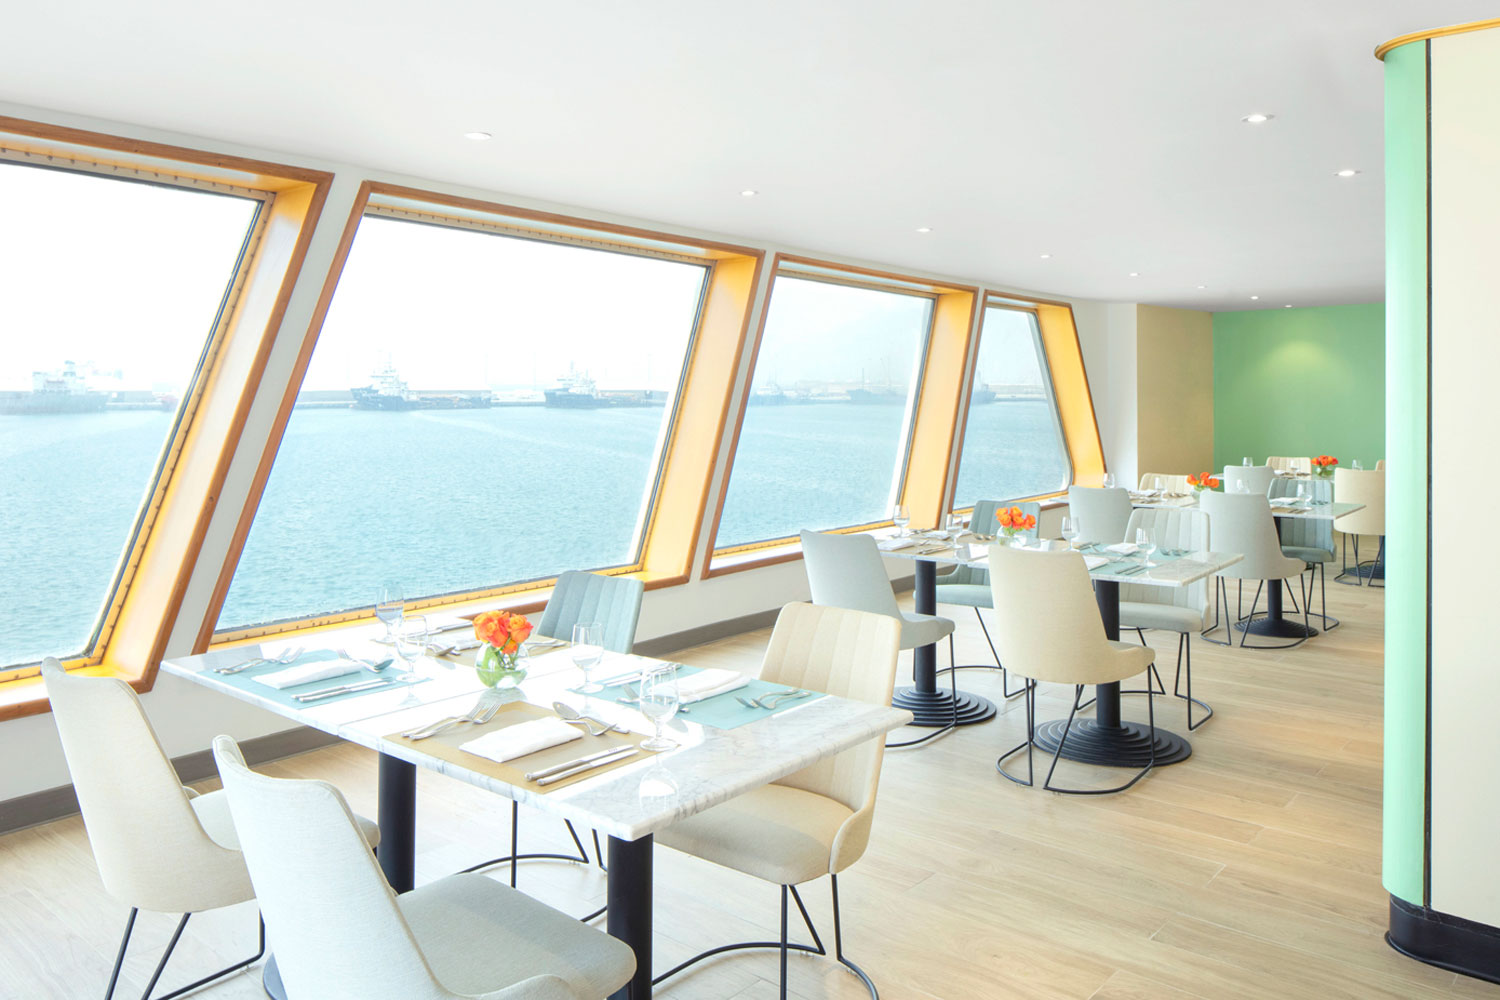 QE2 Dubai launches brand-new ‘Culinary World Cruise Series